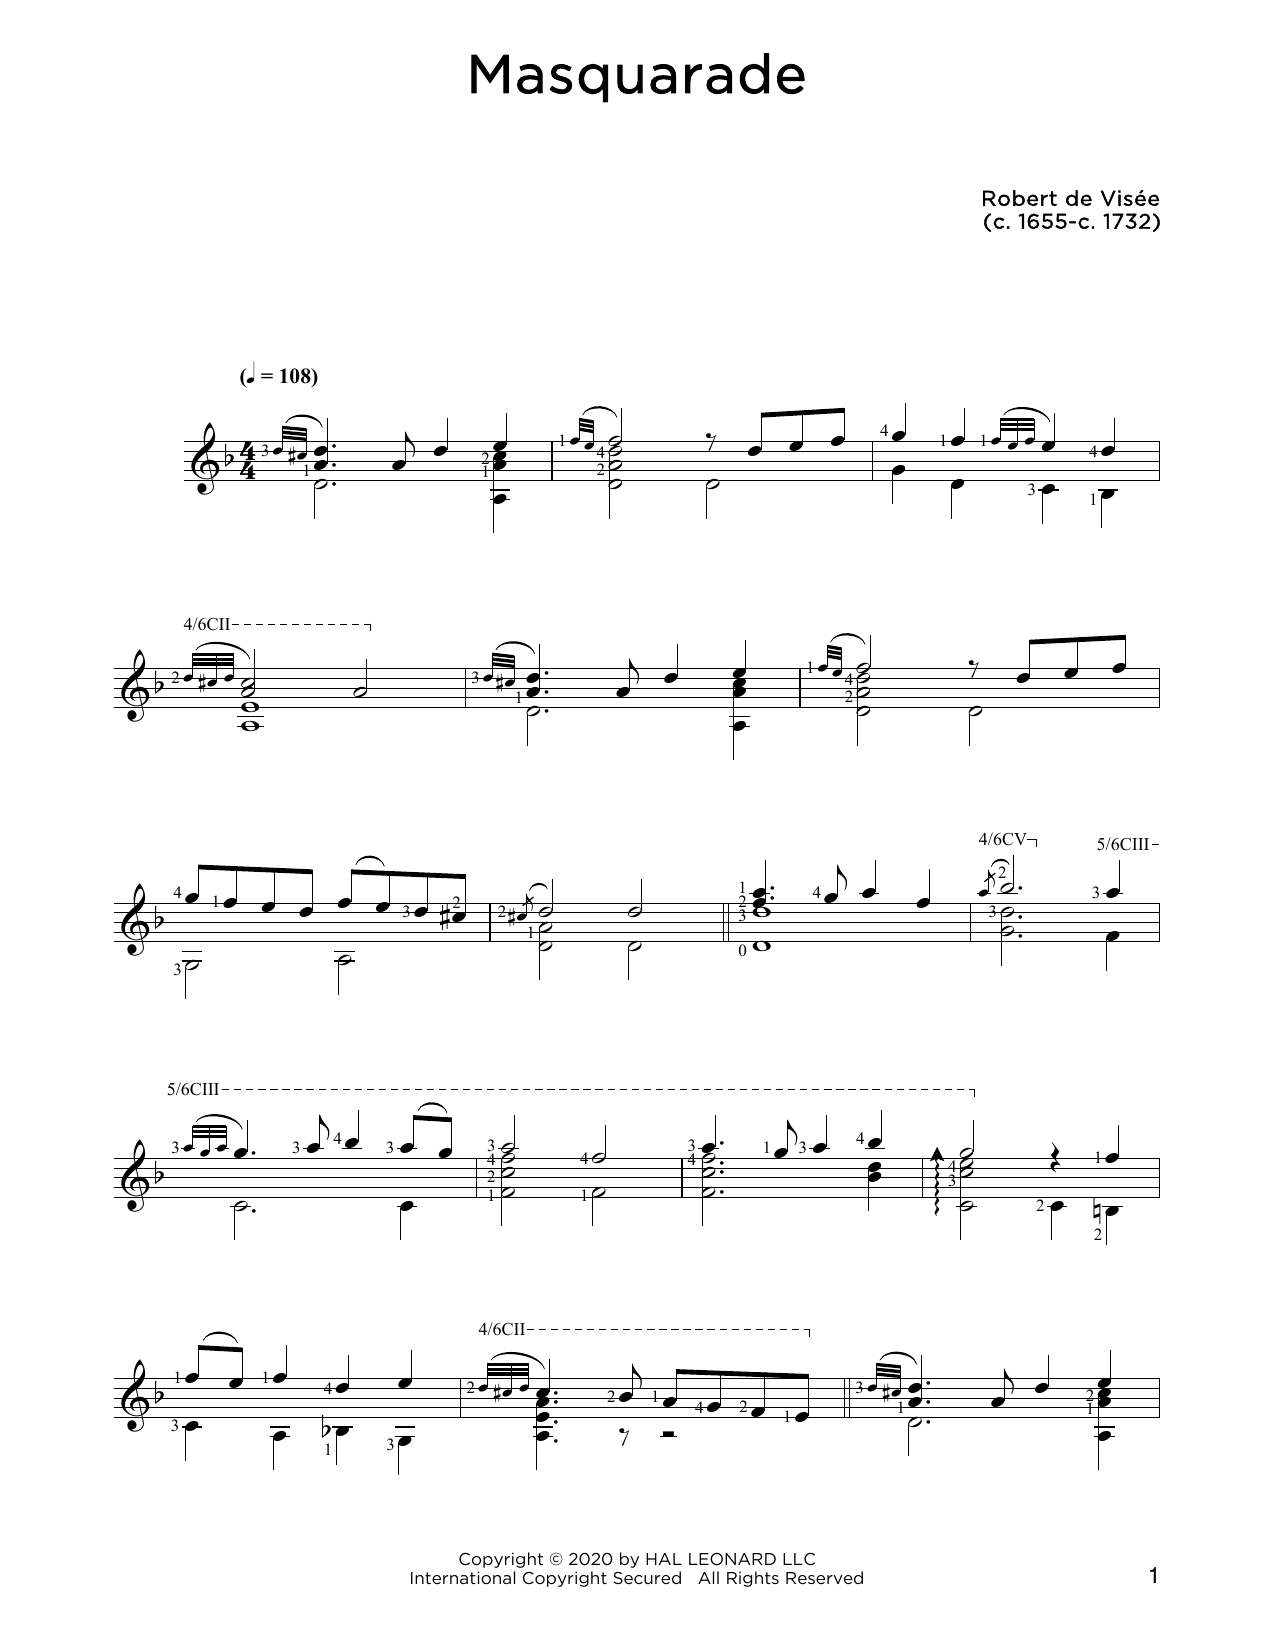 Robert de Visee Masquarade Sheet Music Notes & Chords for Solo Guitar - Download or Print PDF